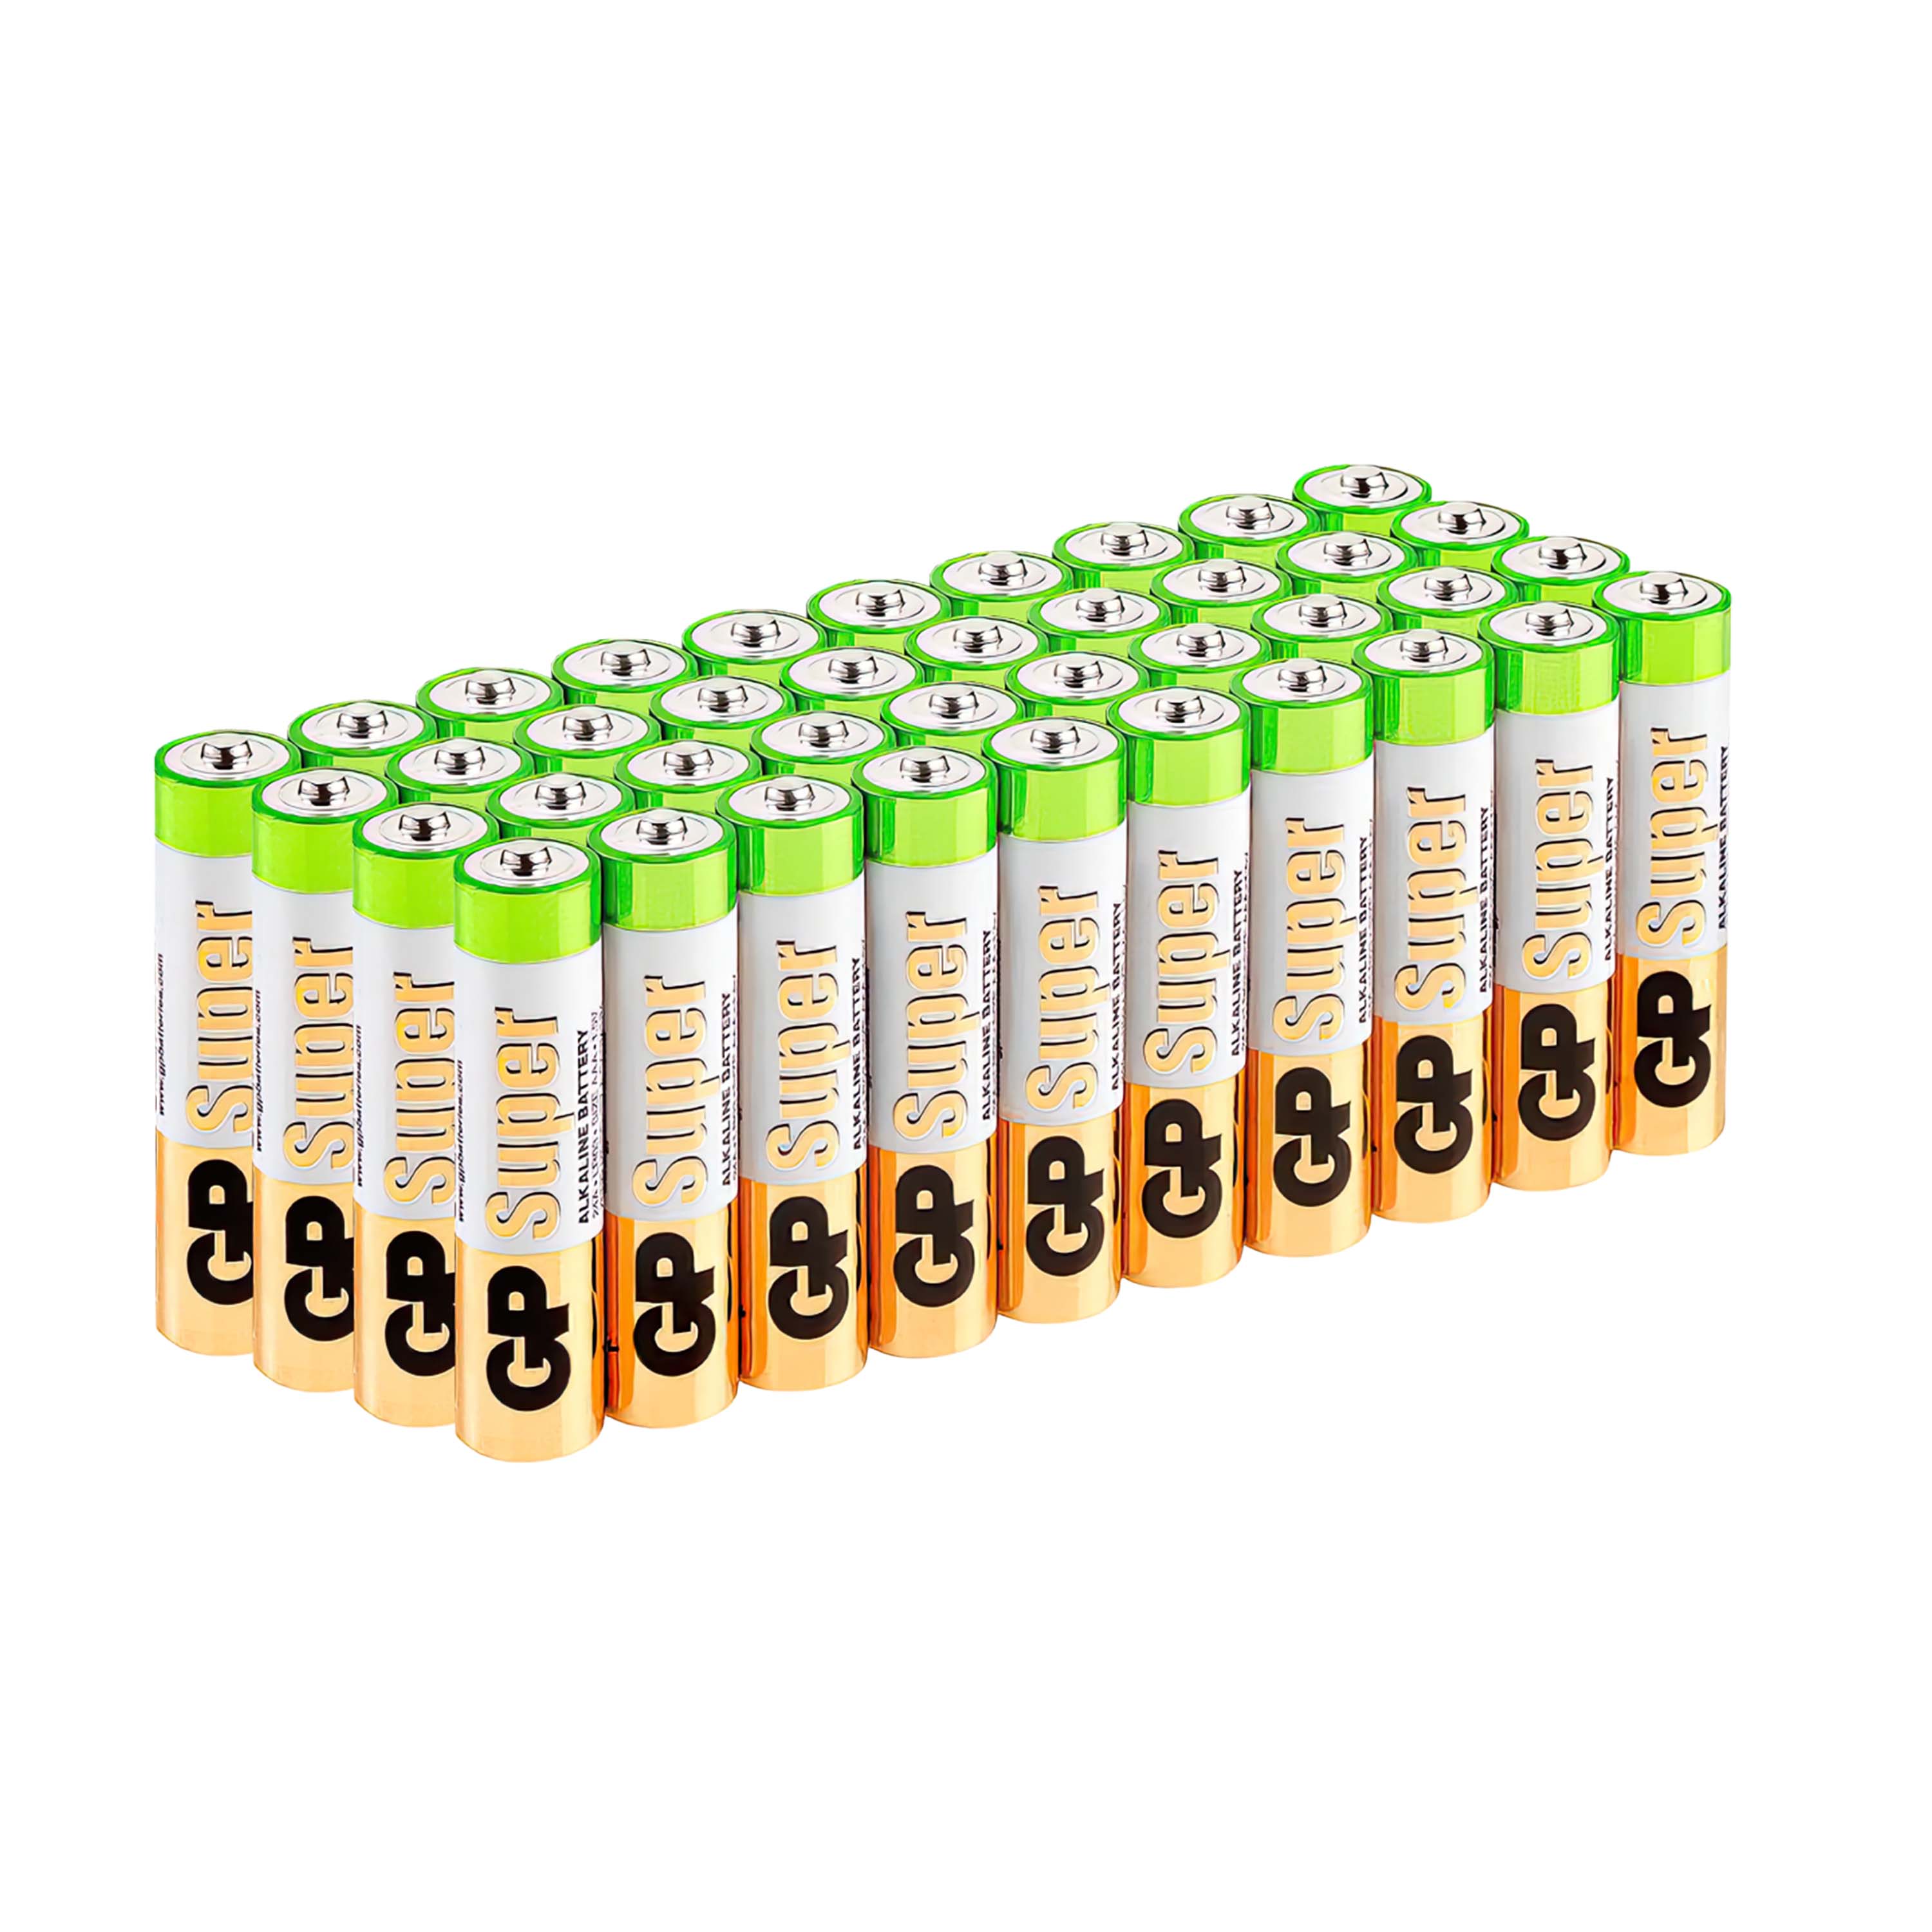 Батарея GP Super Alkaline 24A LR03 AAA (40шт)